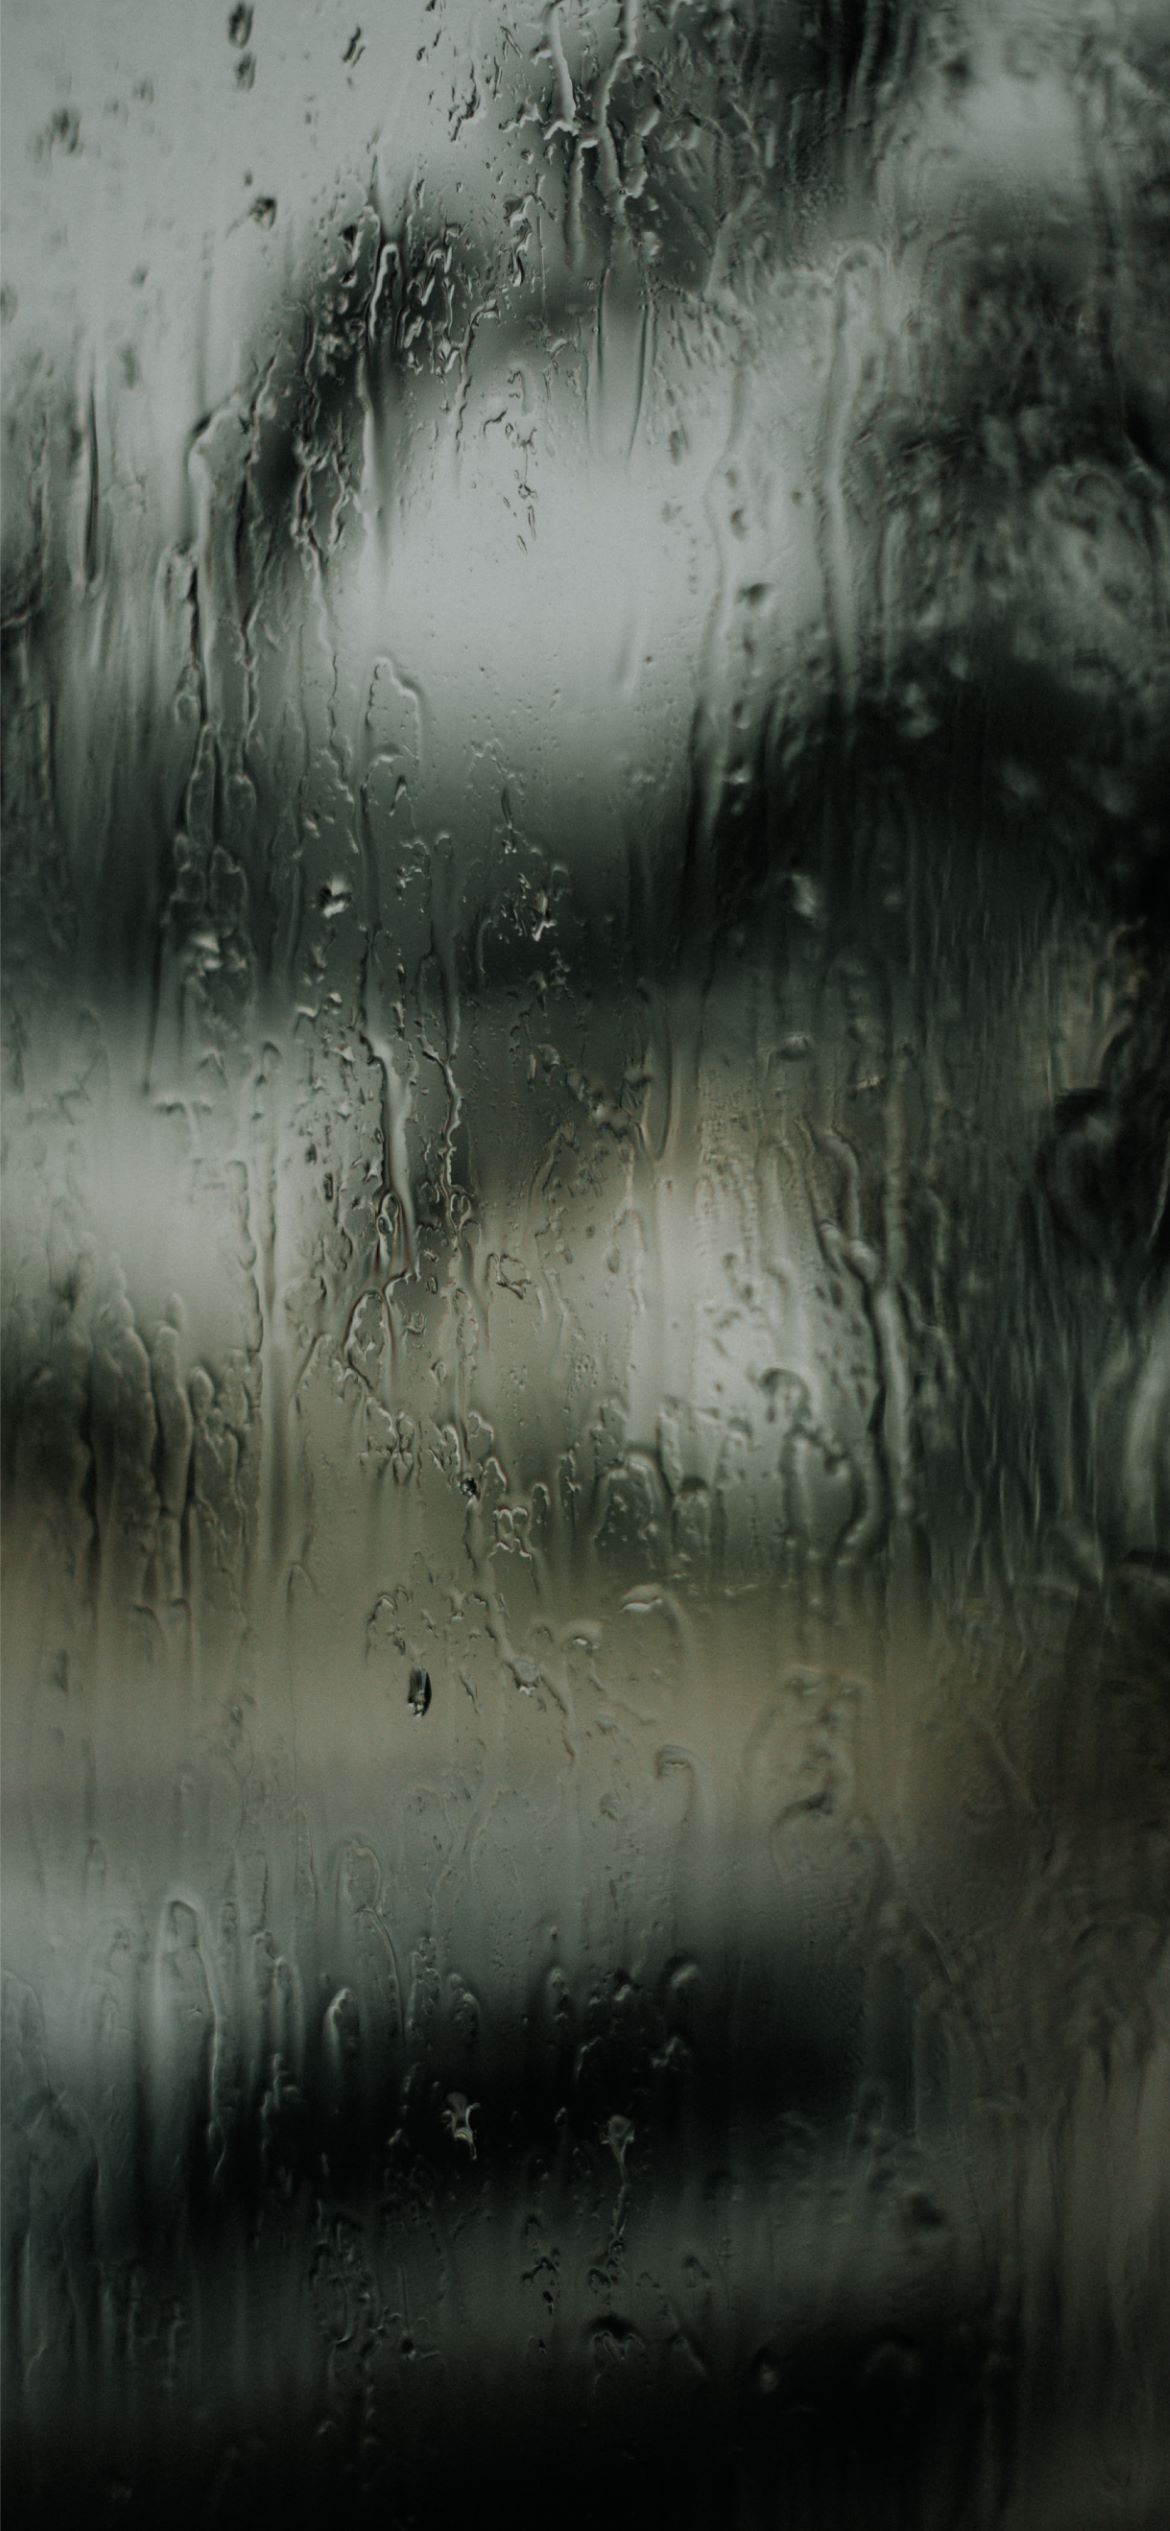 Raindrops on a window pane - Silver